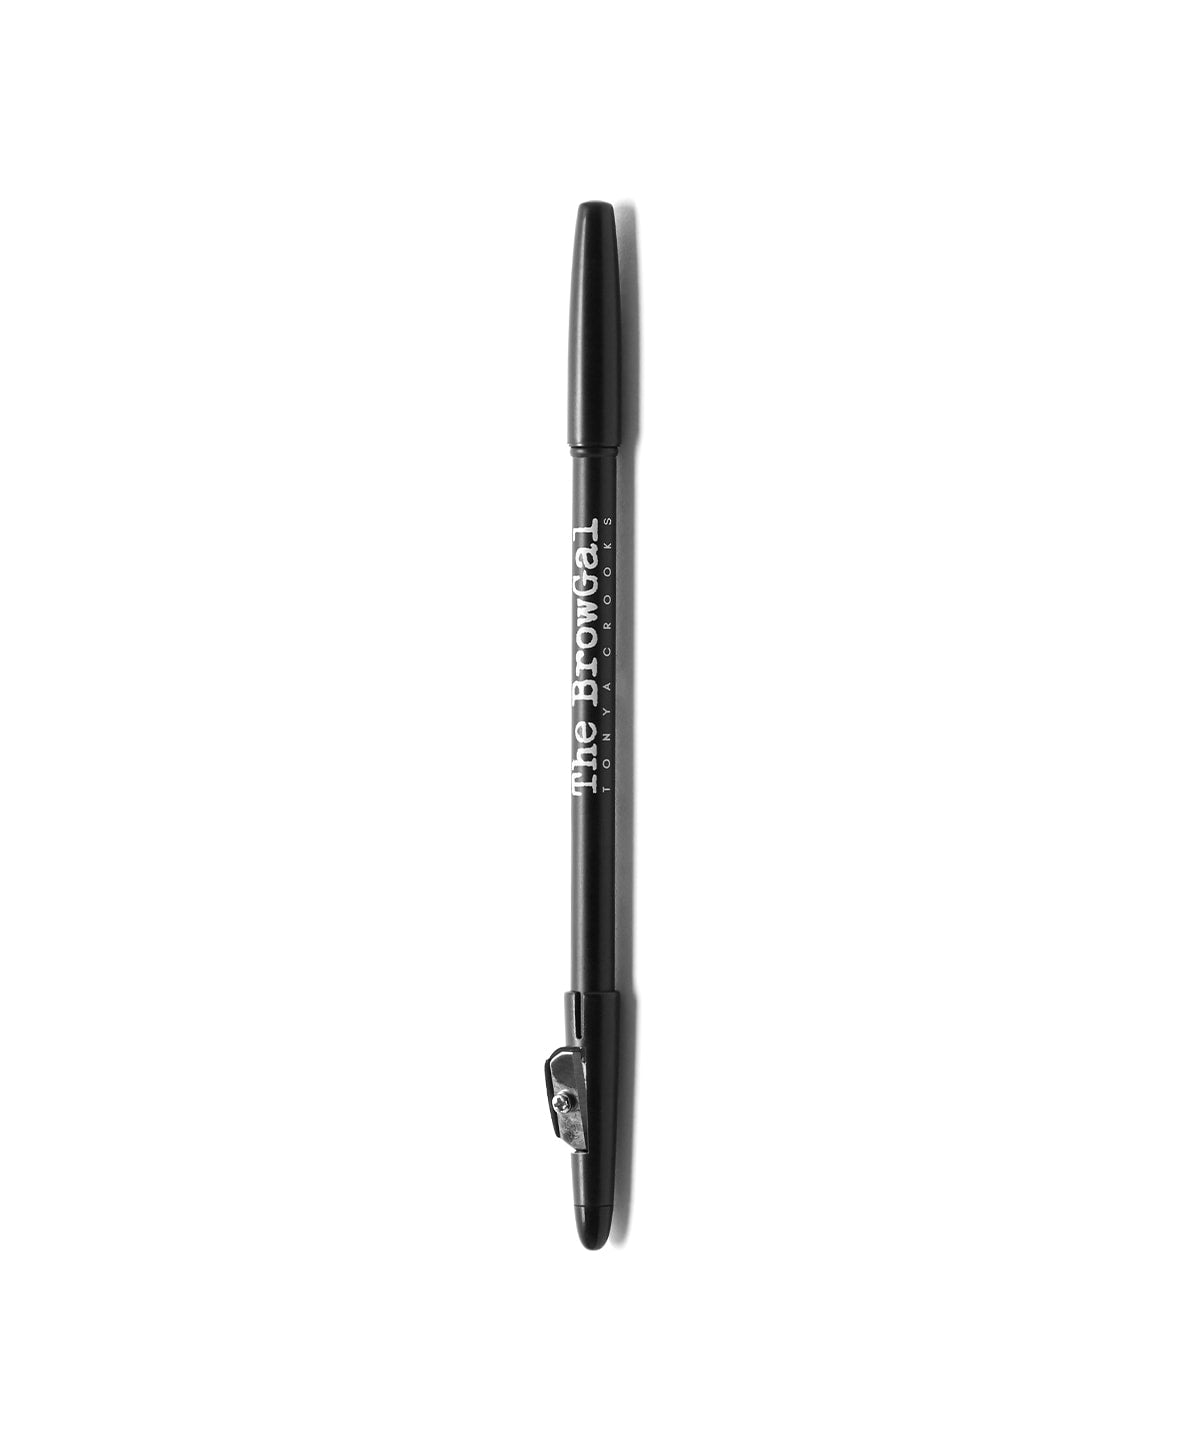 The BrowGal Skinny Eyebrow Pencils